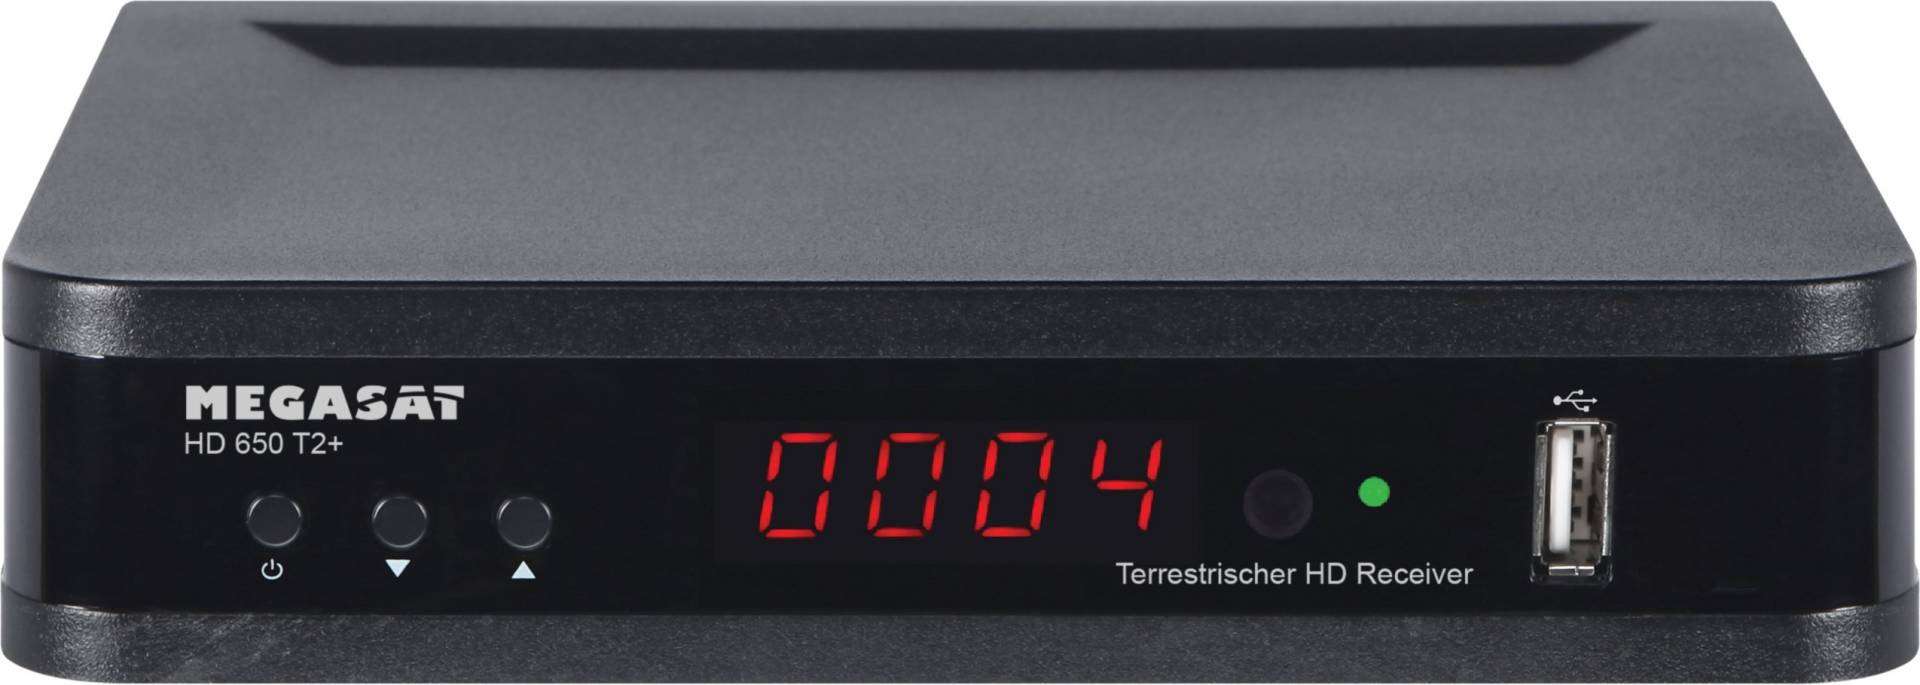 Megasat DVB-T-Receiver HD 650 T2+, 12 / 230 Volt von Megasat